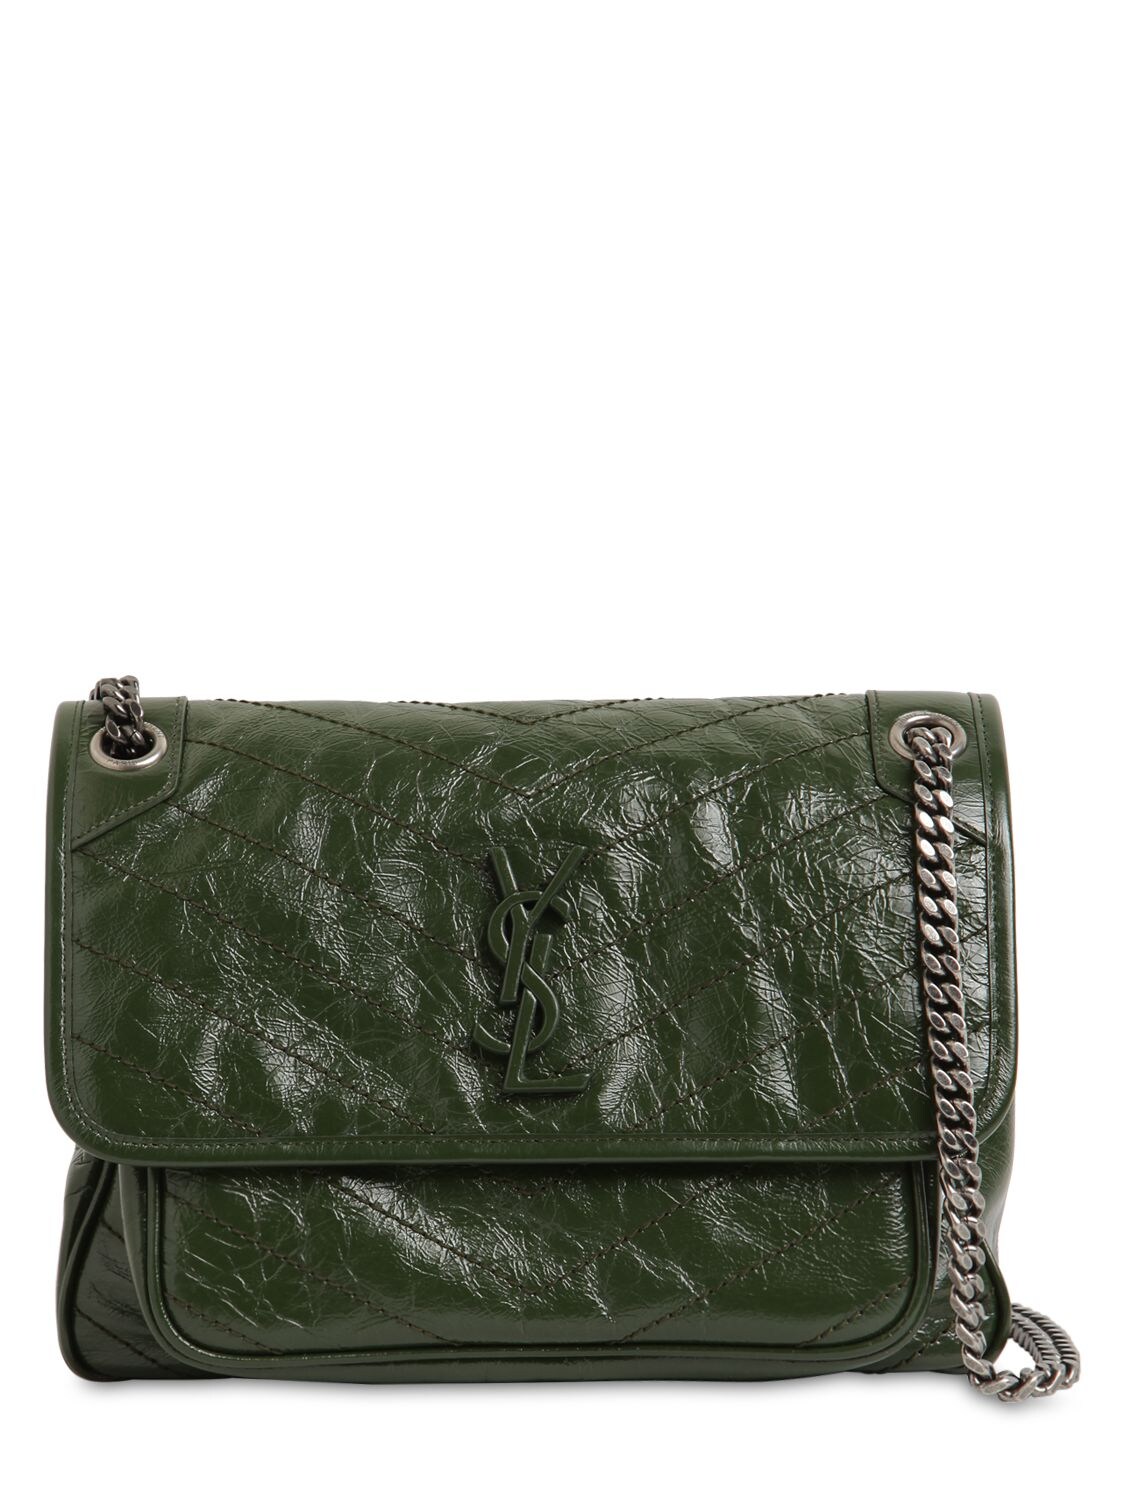 Saint Laurent Medium Niki Monogram Leather Bag In Tropical Green